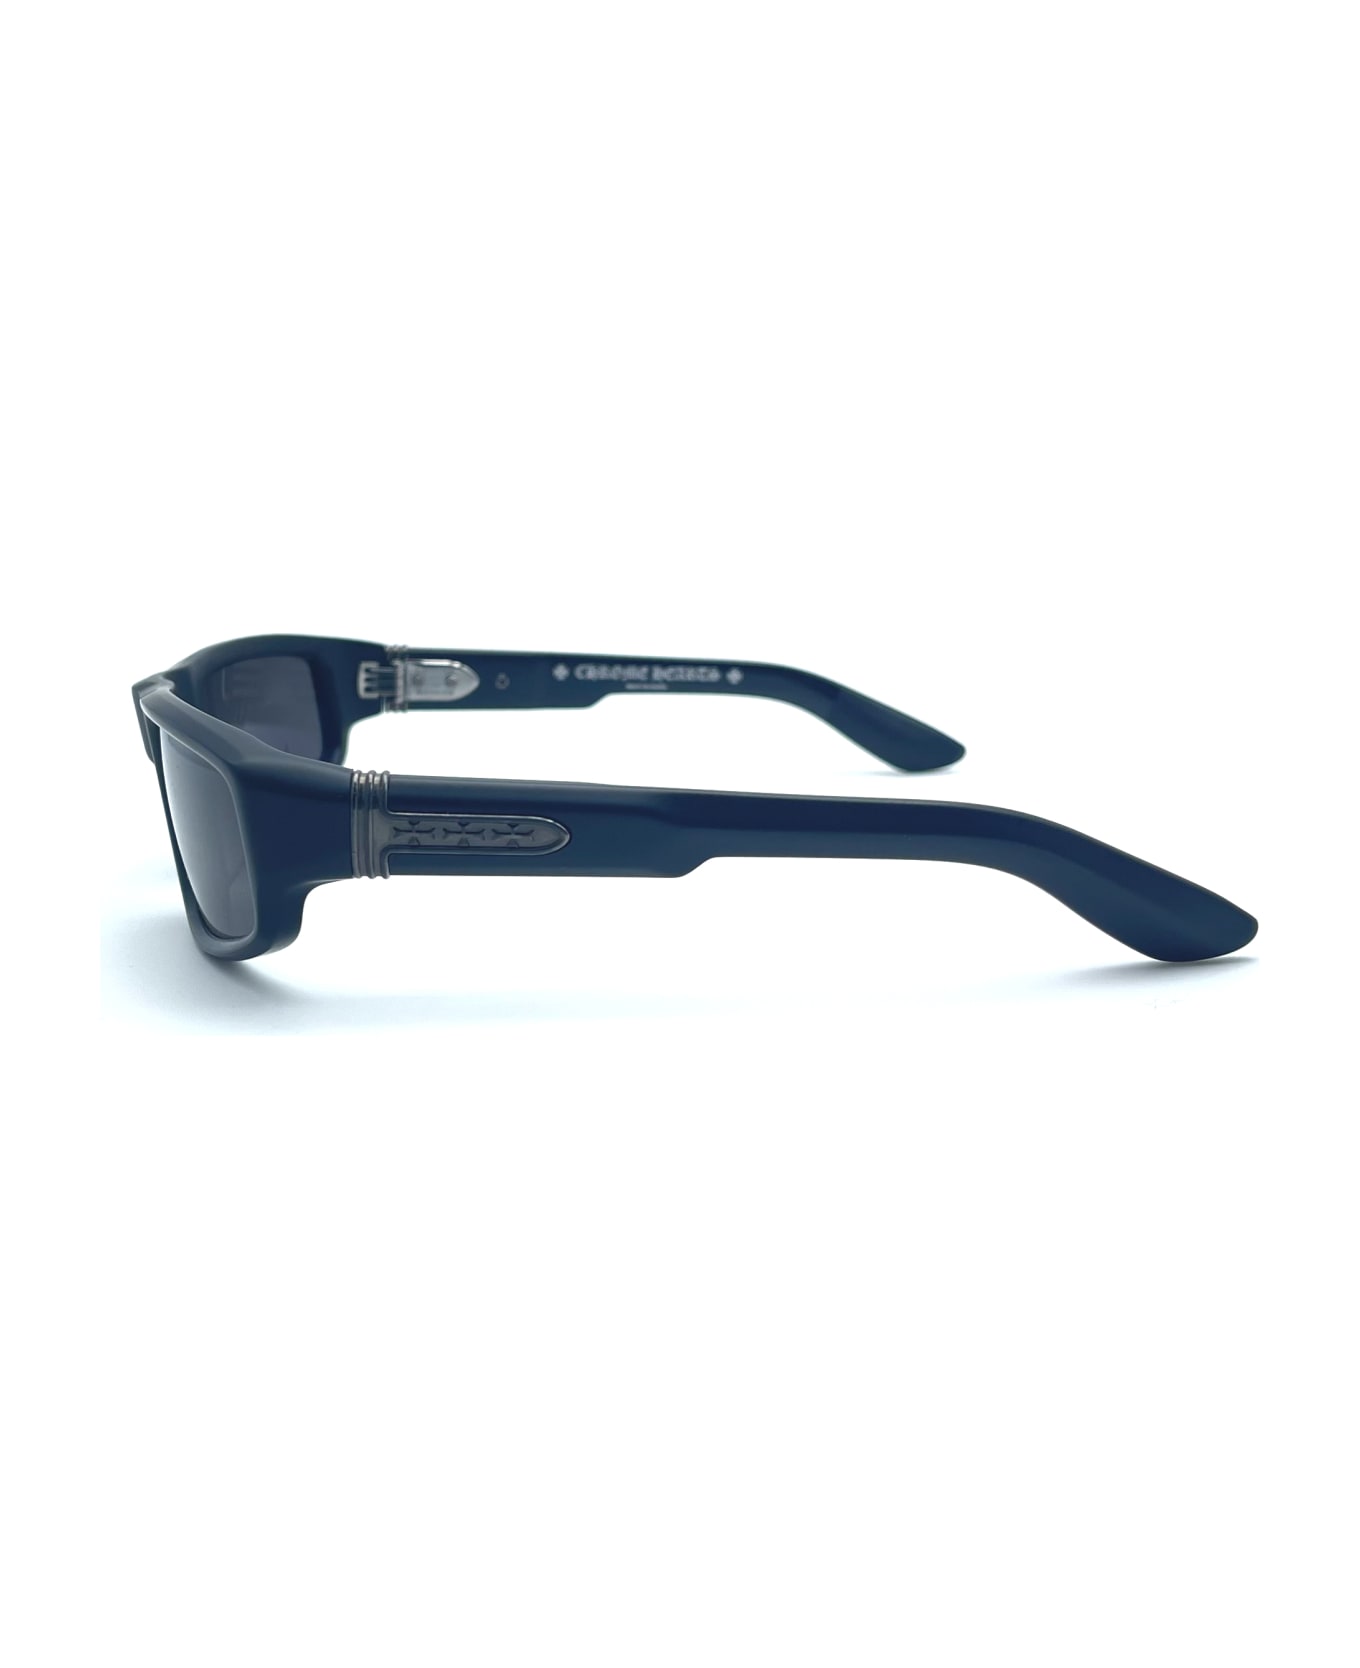 Chrome Hearts T.hutch - Matte Black Sunglasses - Matte black